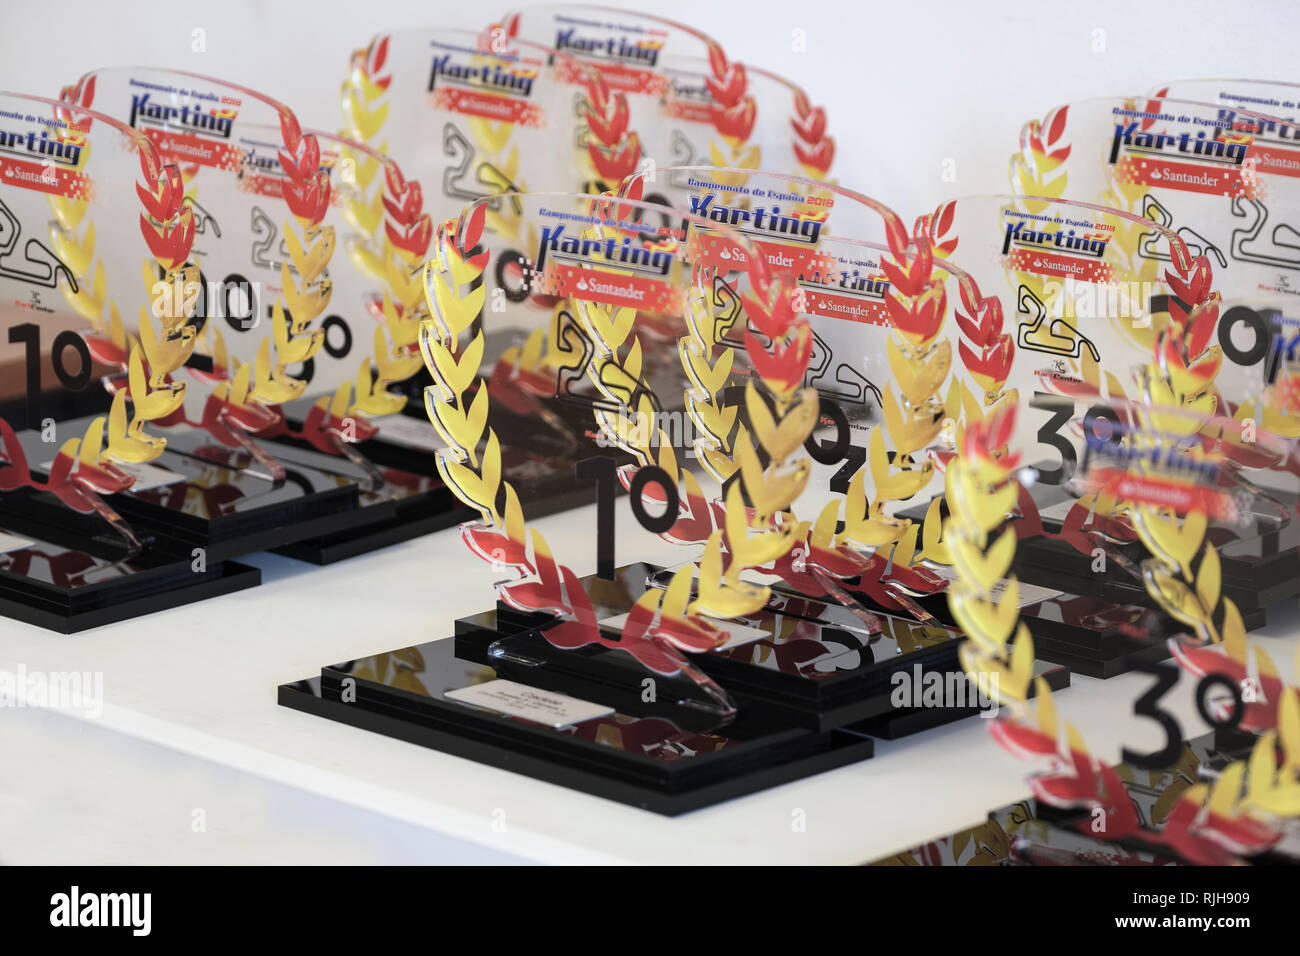 Go Karting winners trophies on display, Campillos, Malaga, Spain Stock Photo